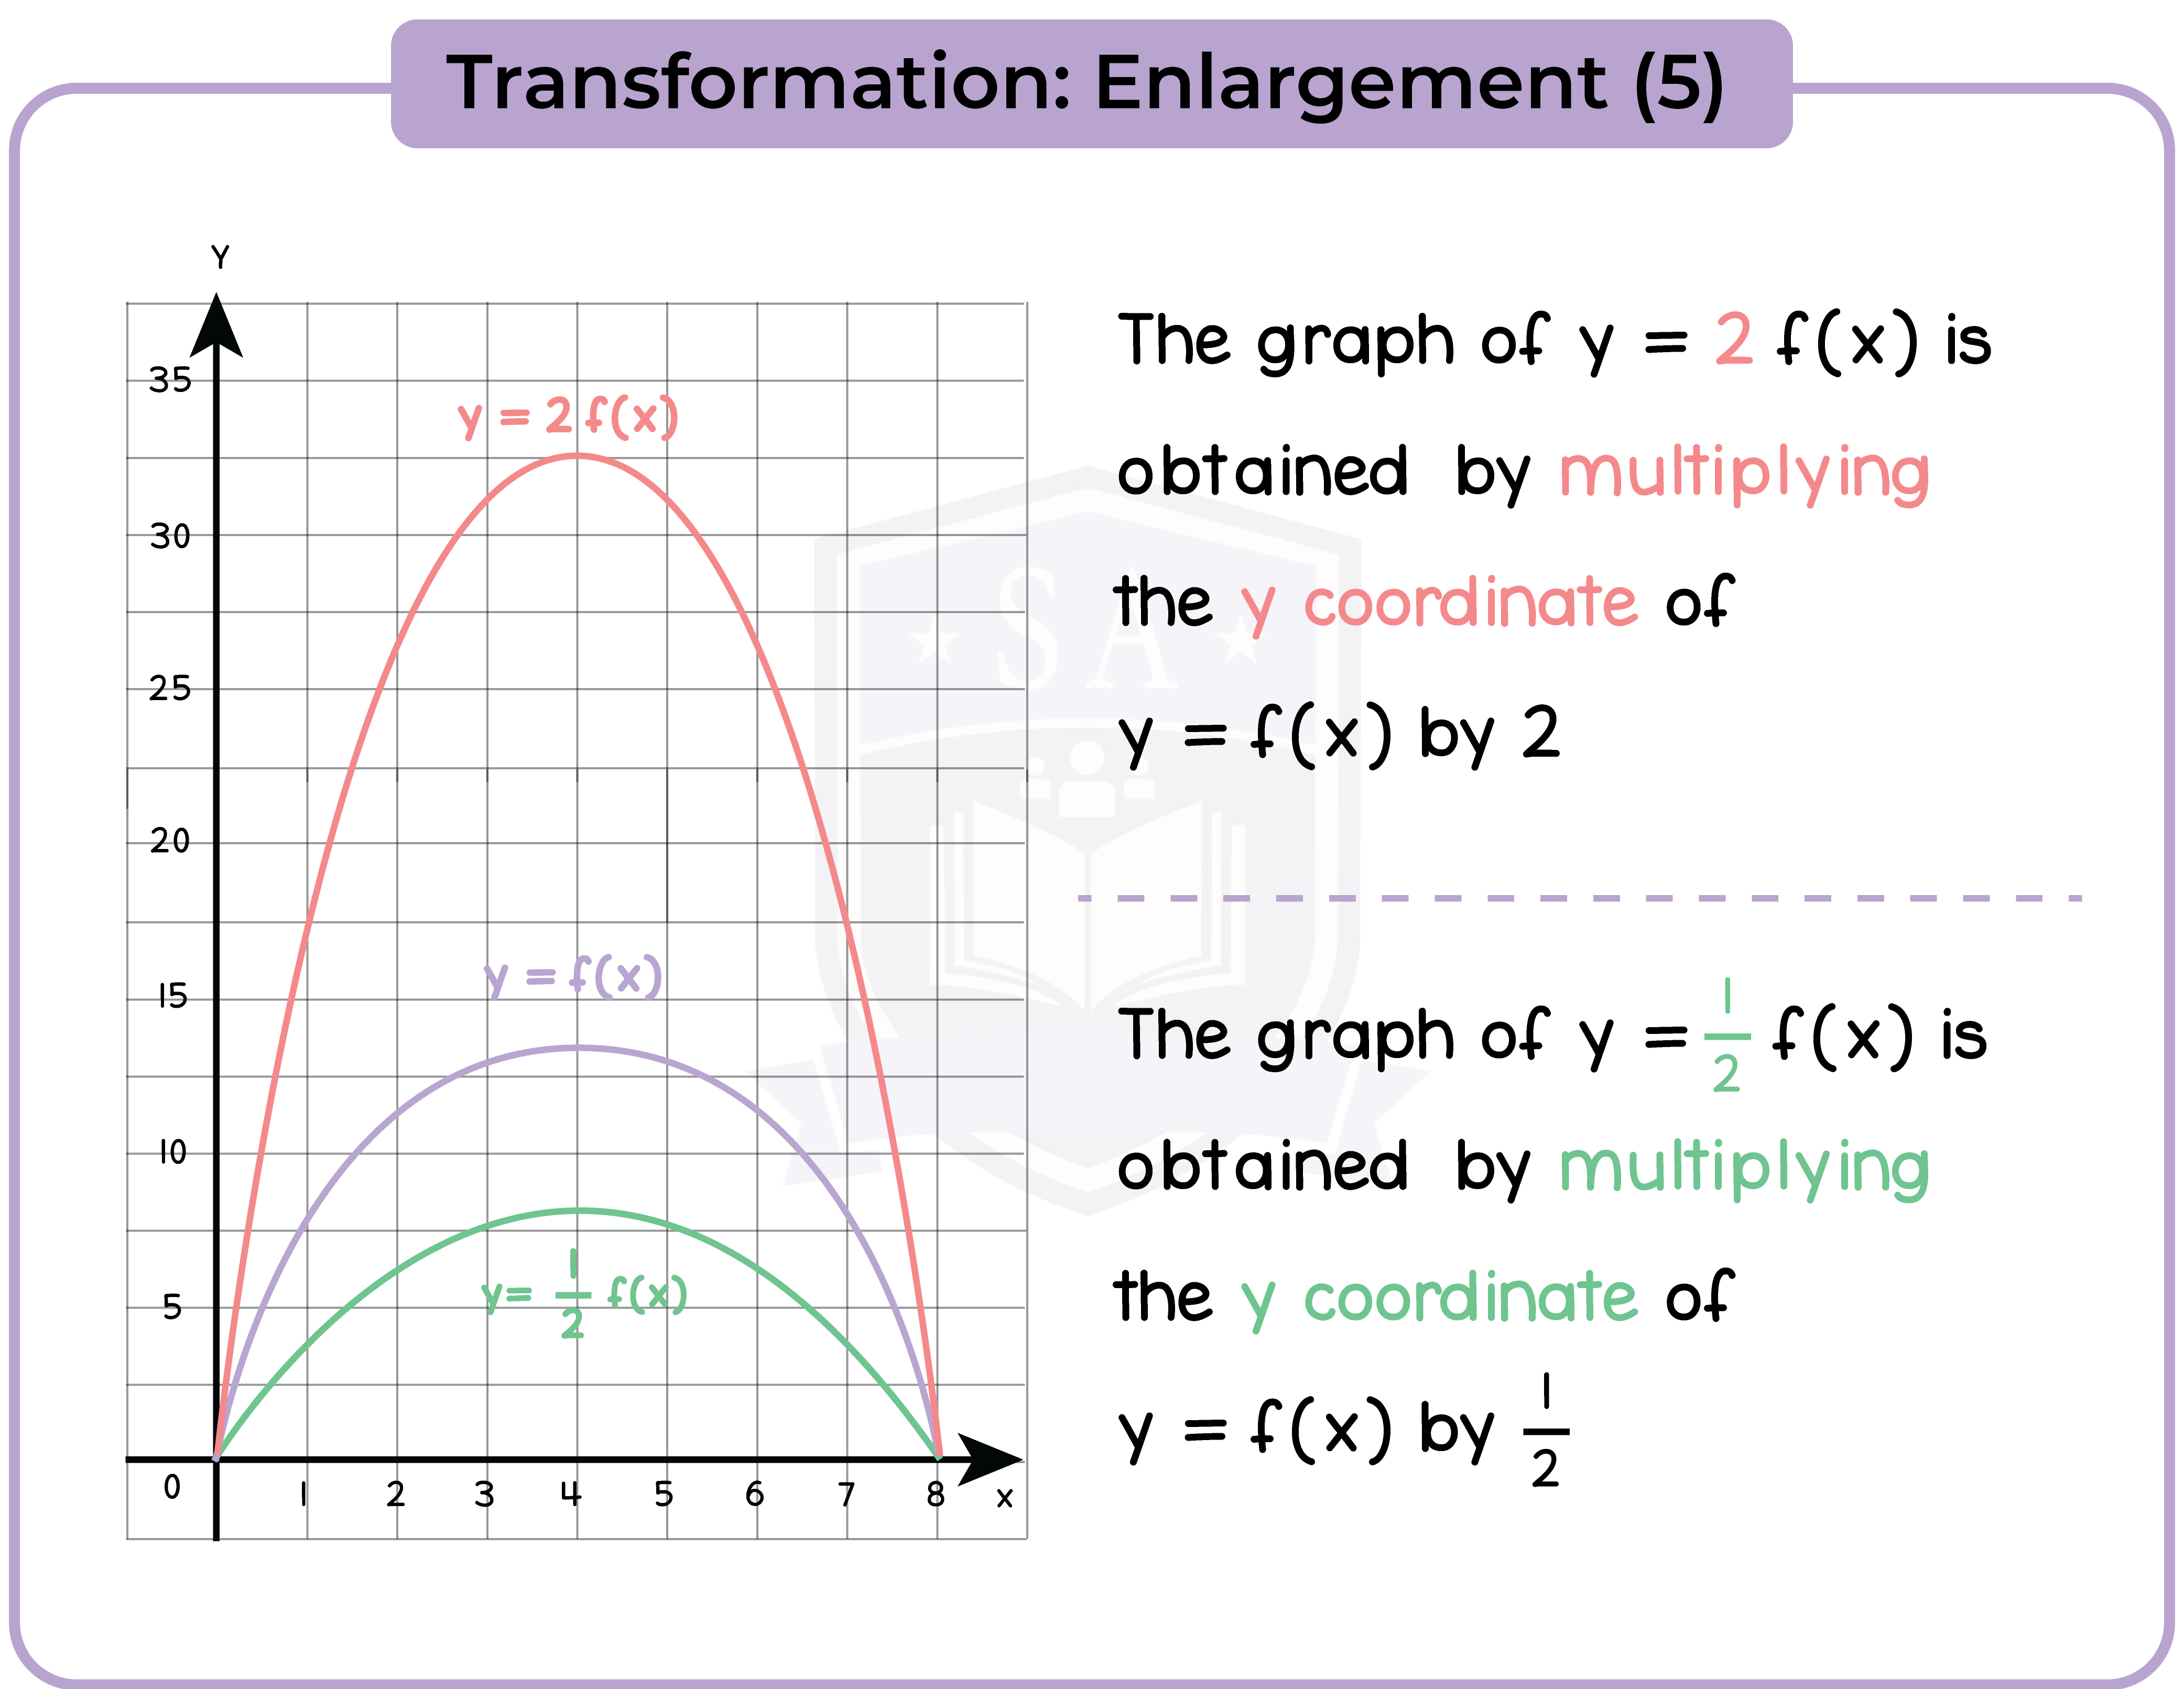 edexcel_igcse_mathematics a_topic 23_graphs_013_Transformation: Enlargement (5)